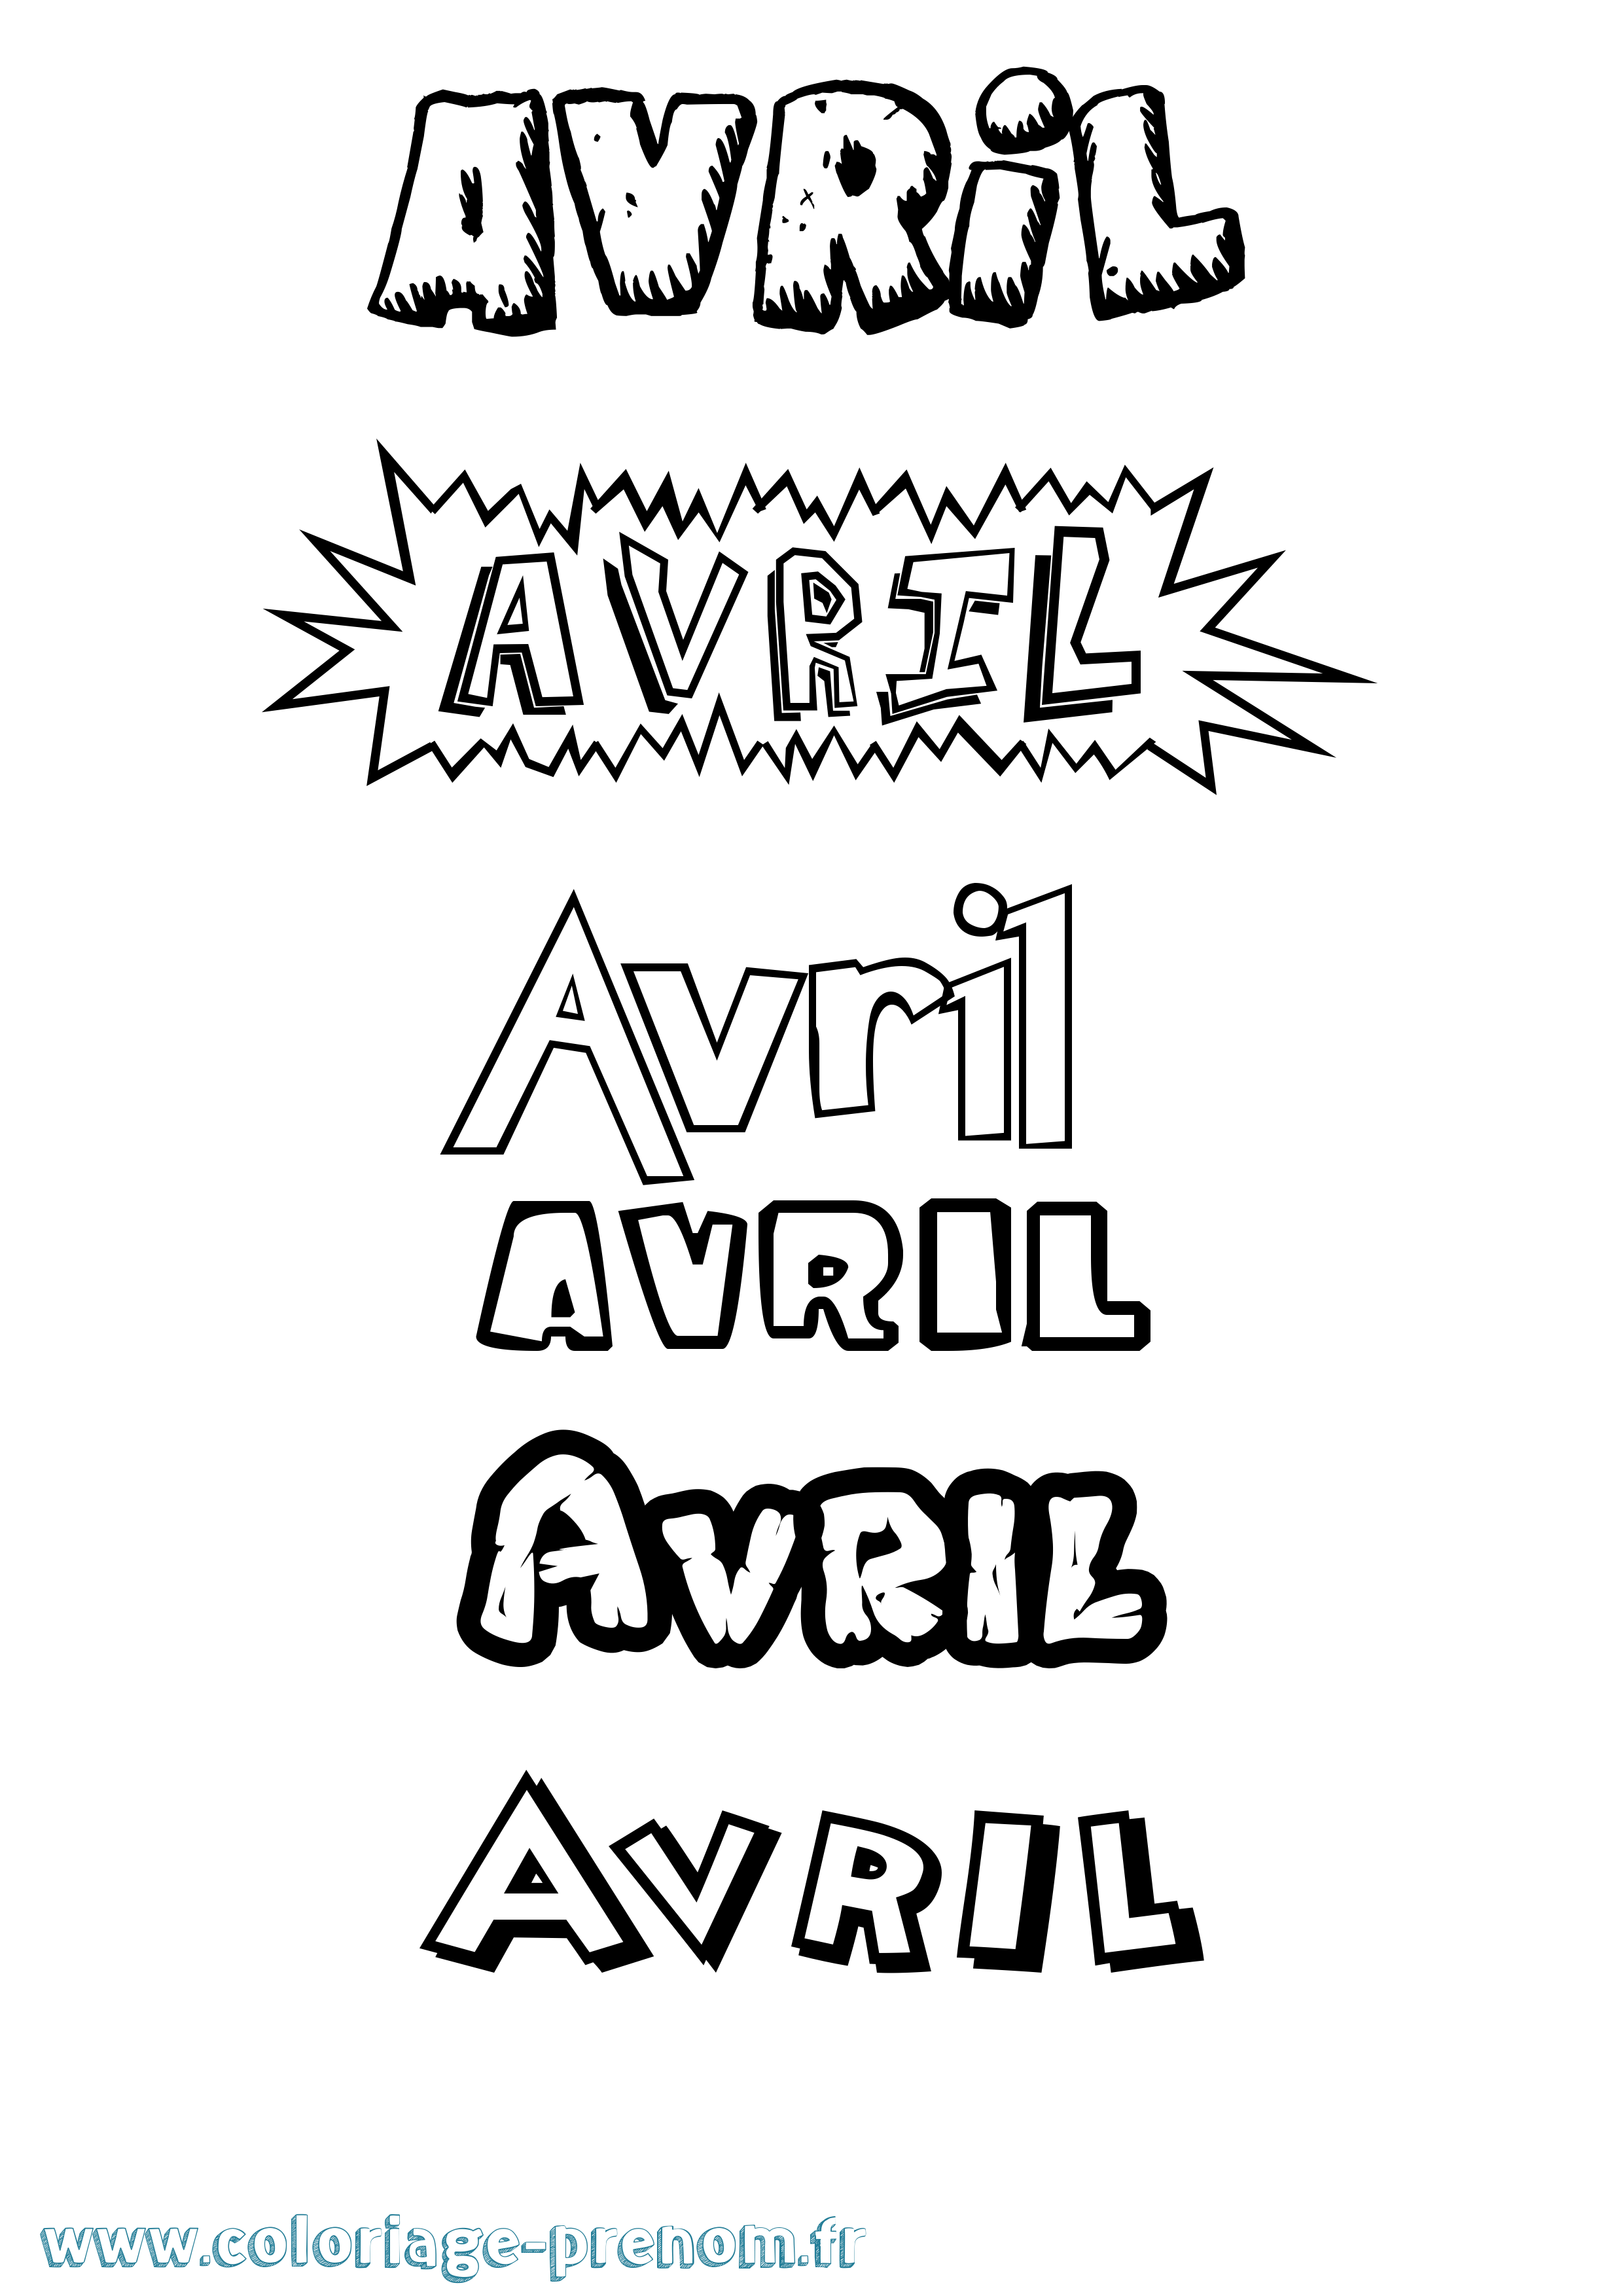 Coloriage prénom Avril